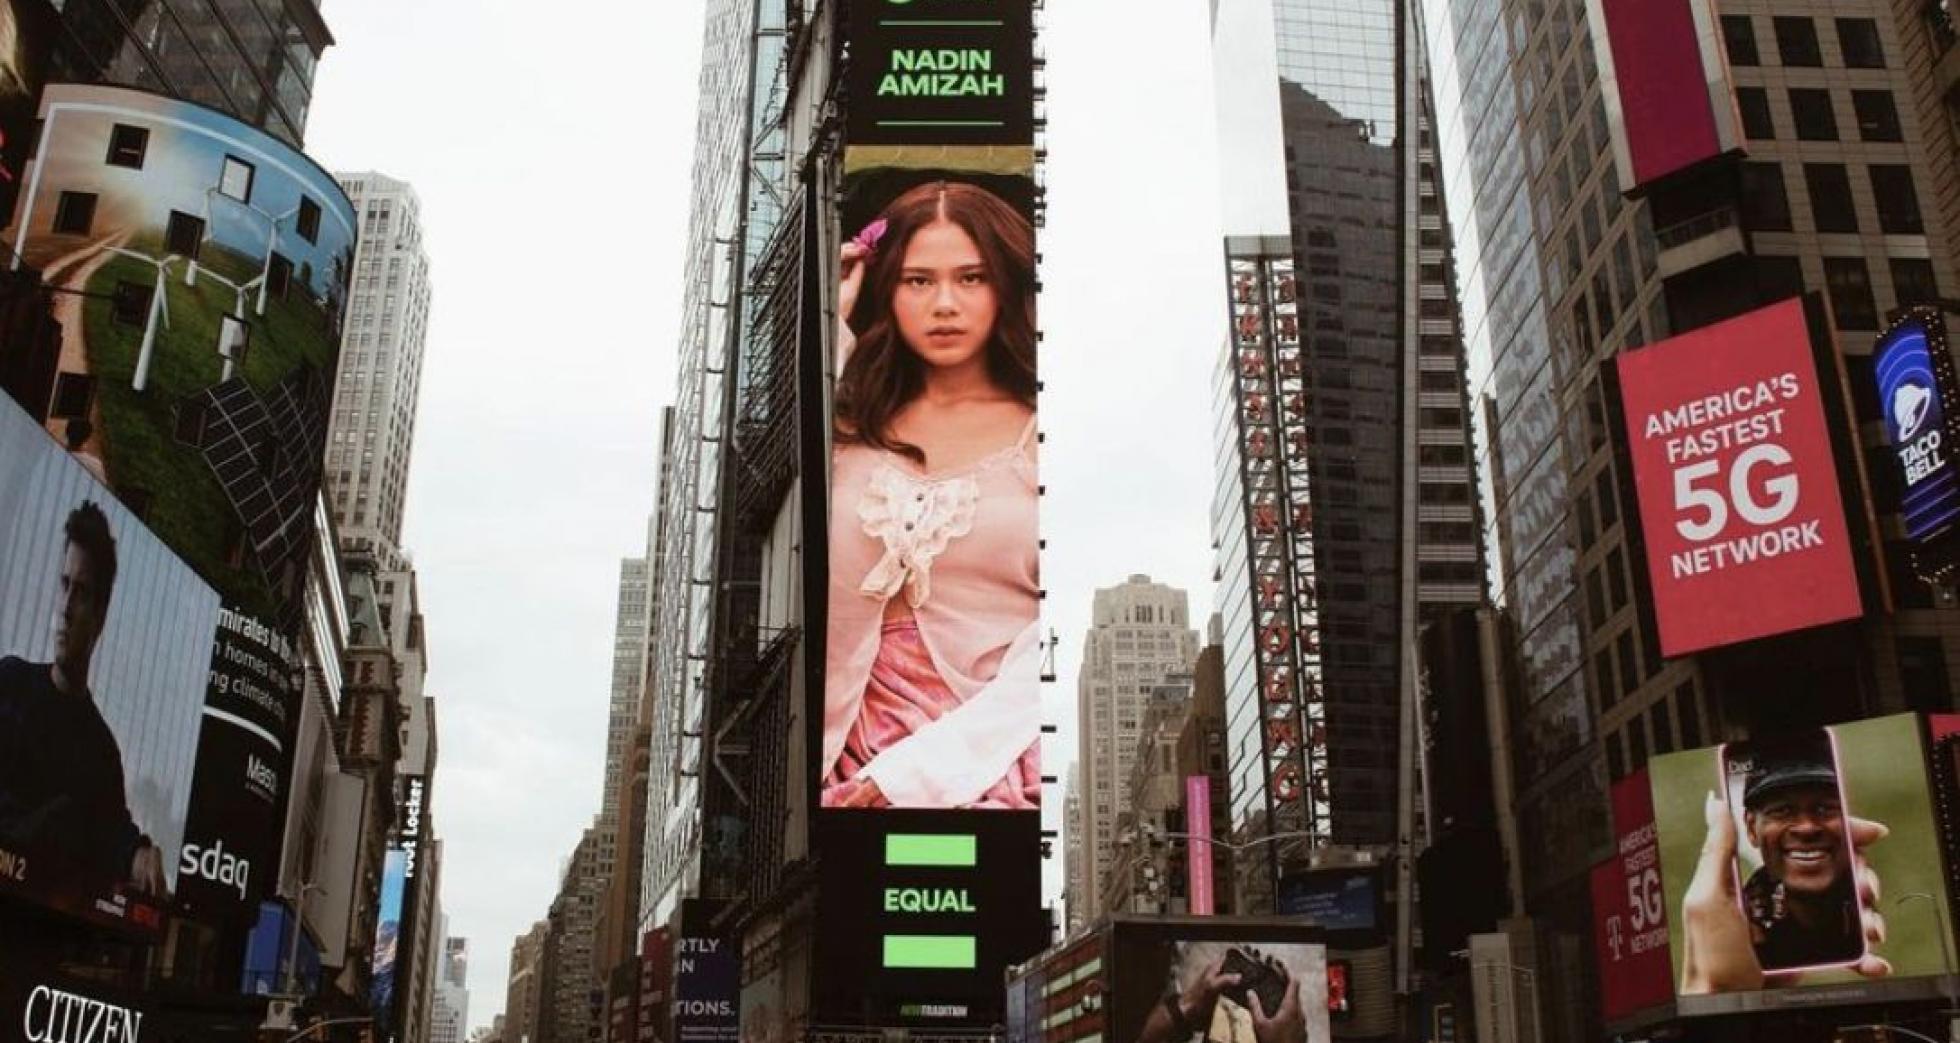 Nadin Times Square Billboard for Spotify Equal